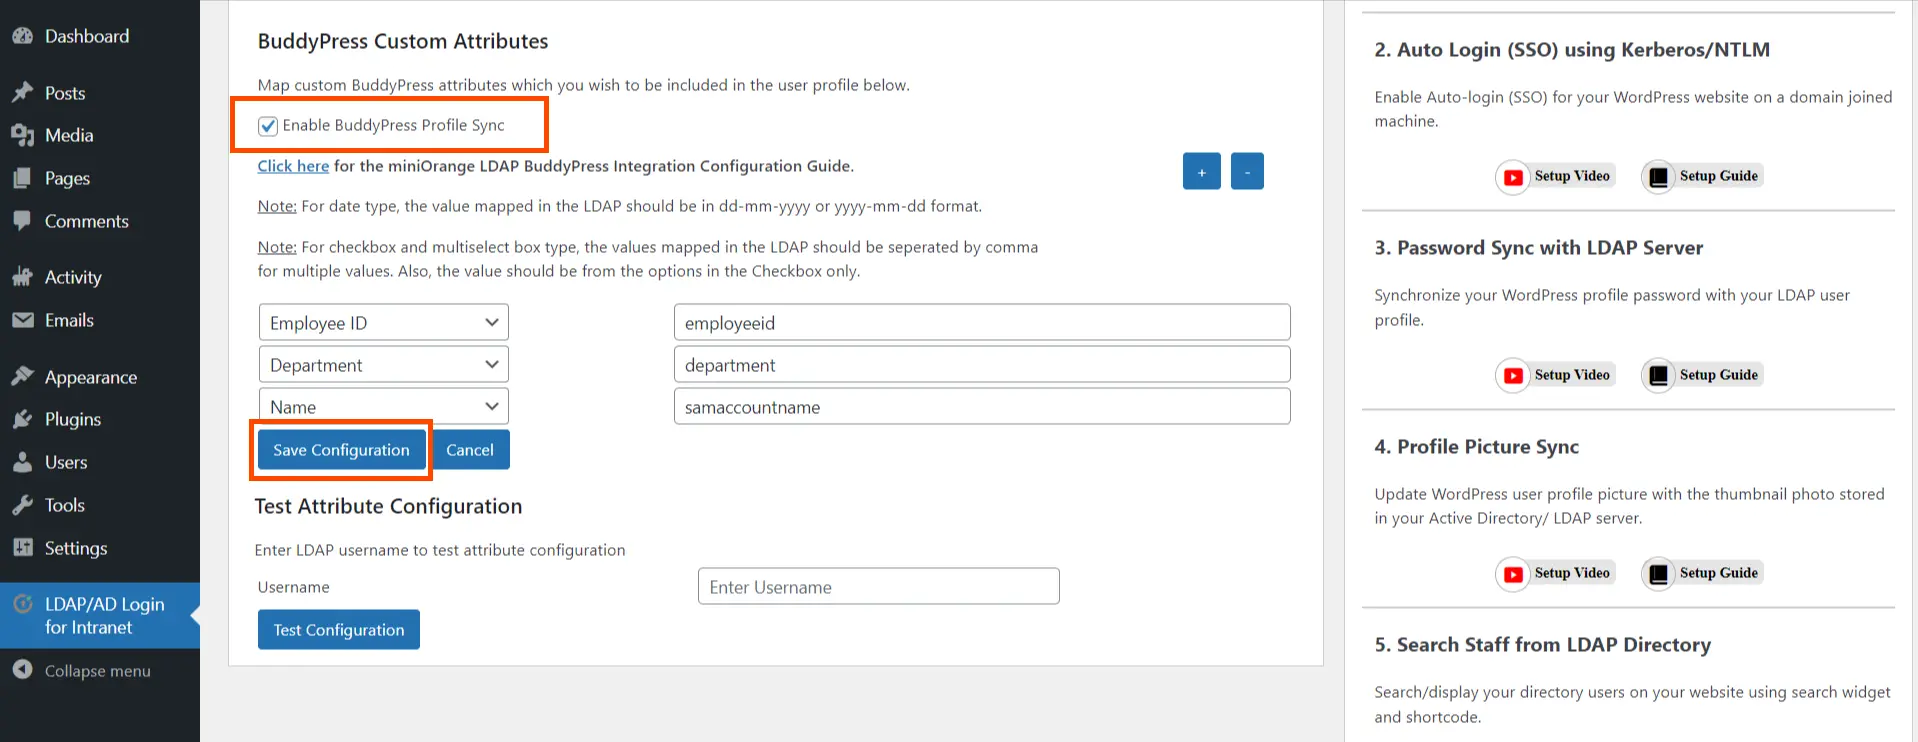 LDAP Active Directory login for intranet sites BuddyPress custom attributes configuration